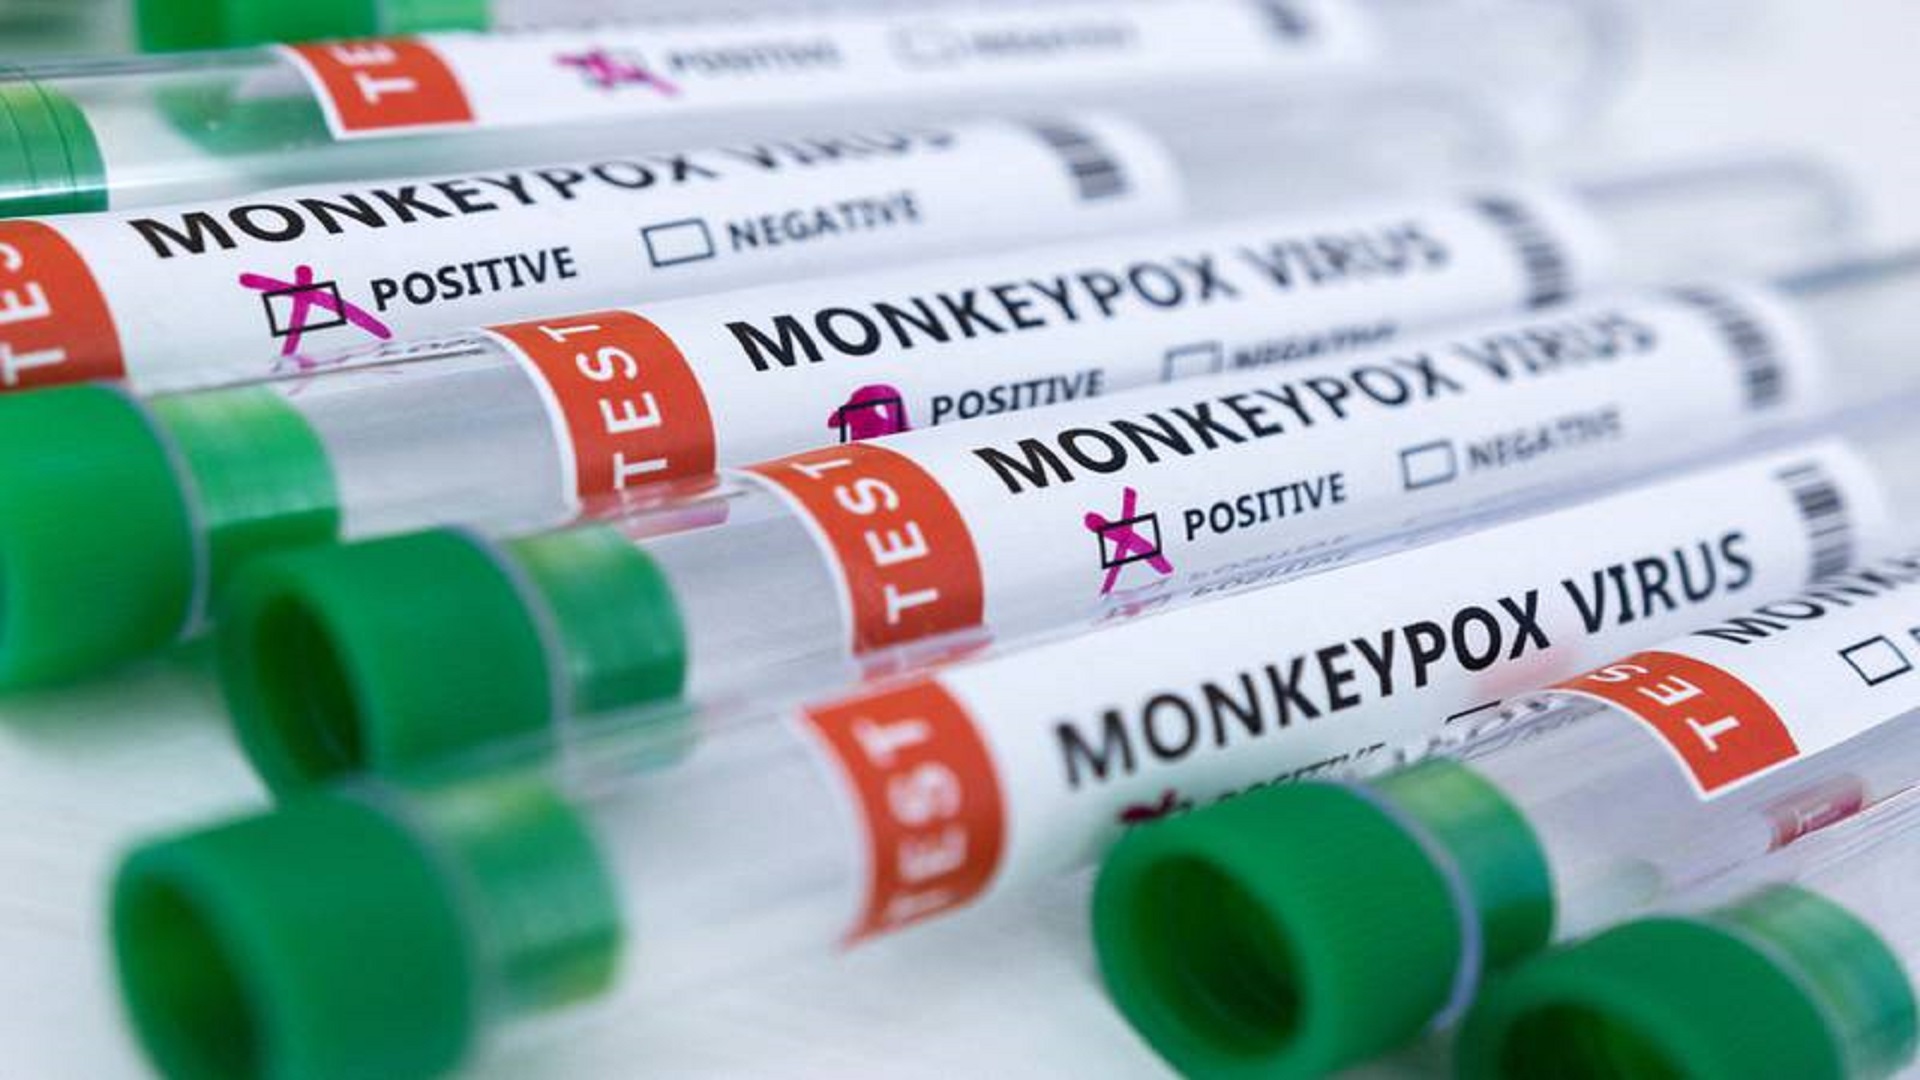 Test tubes labelled "Monkeypox virus positive and negative". Reuters